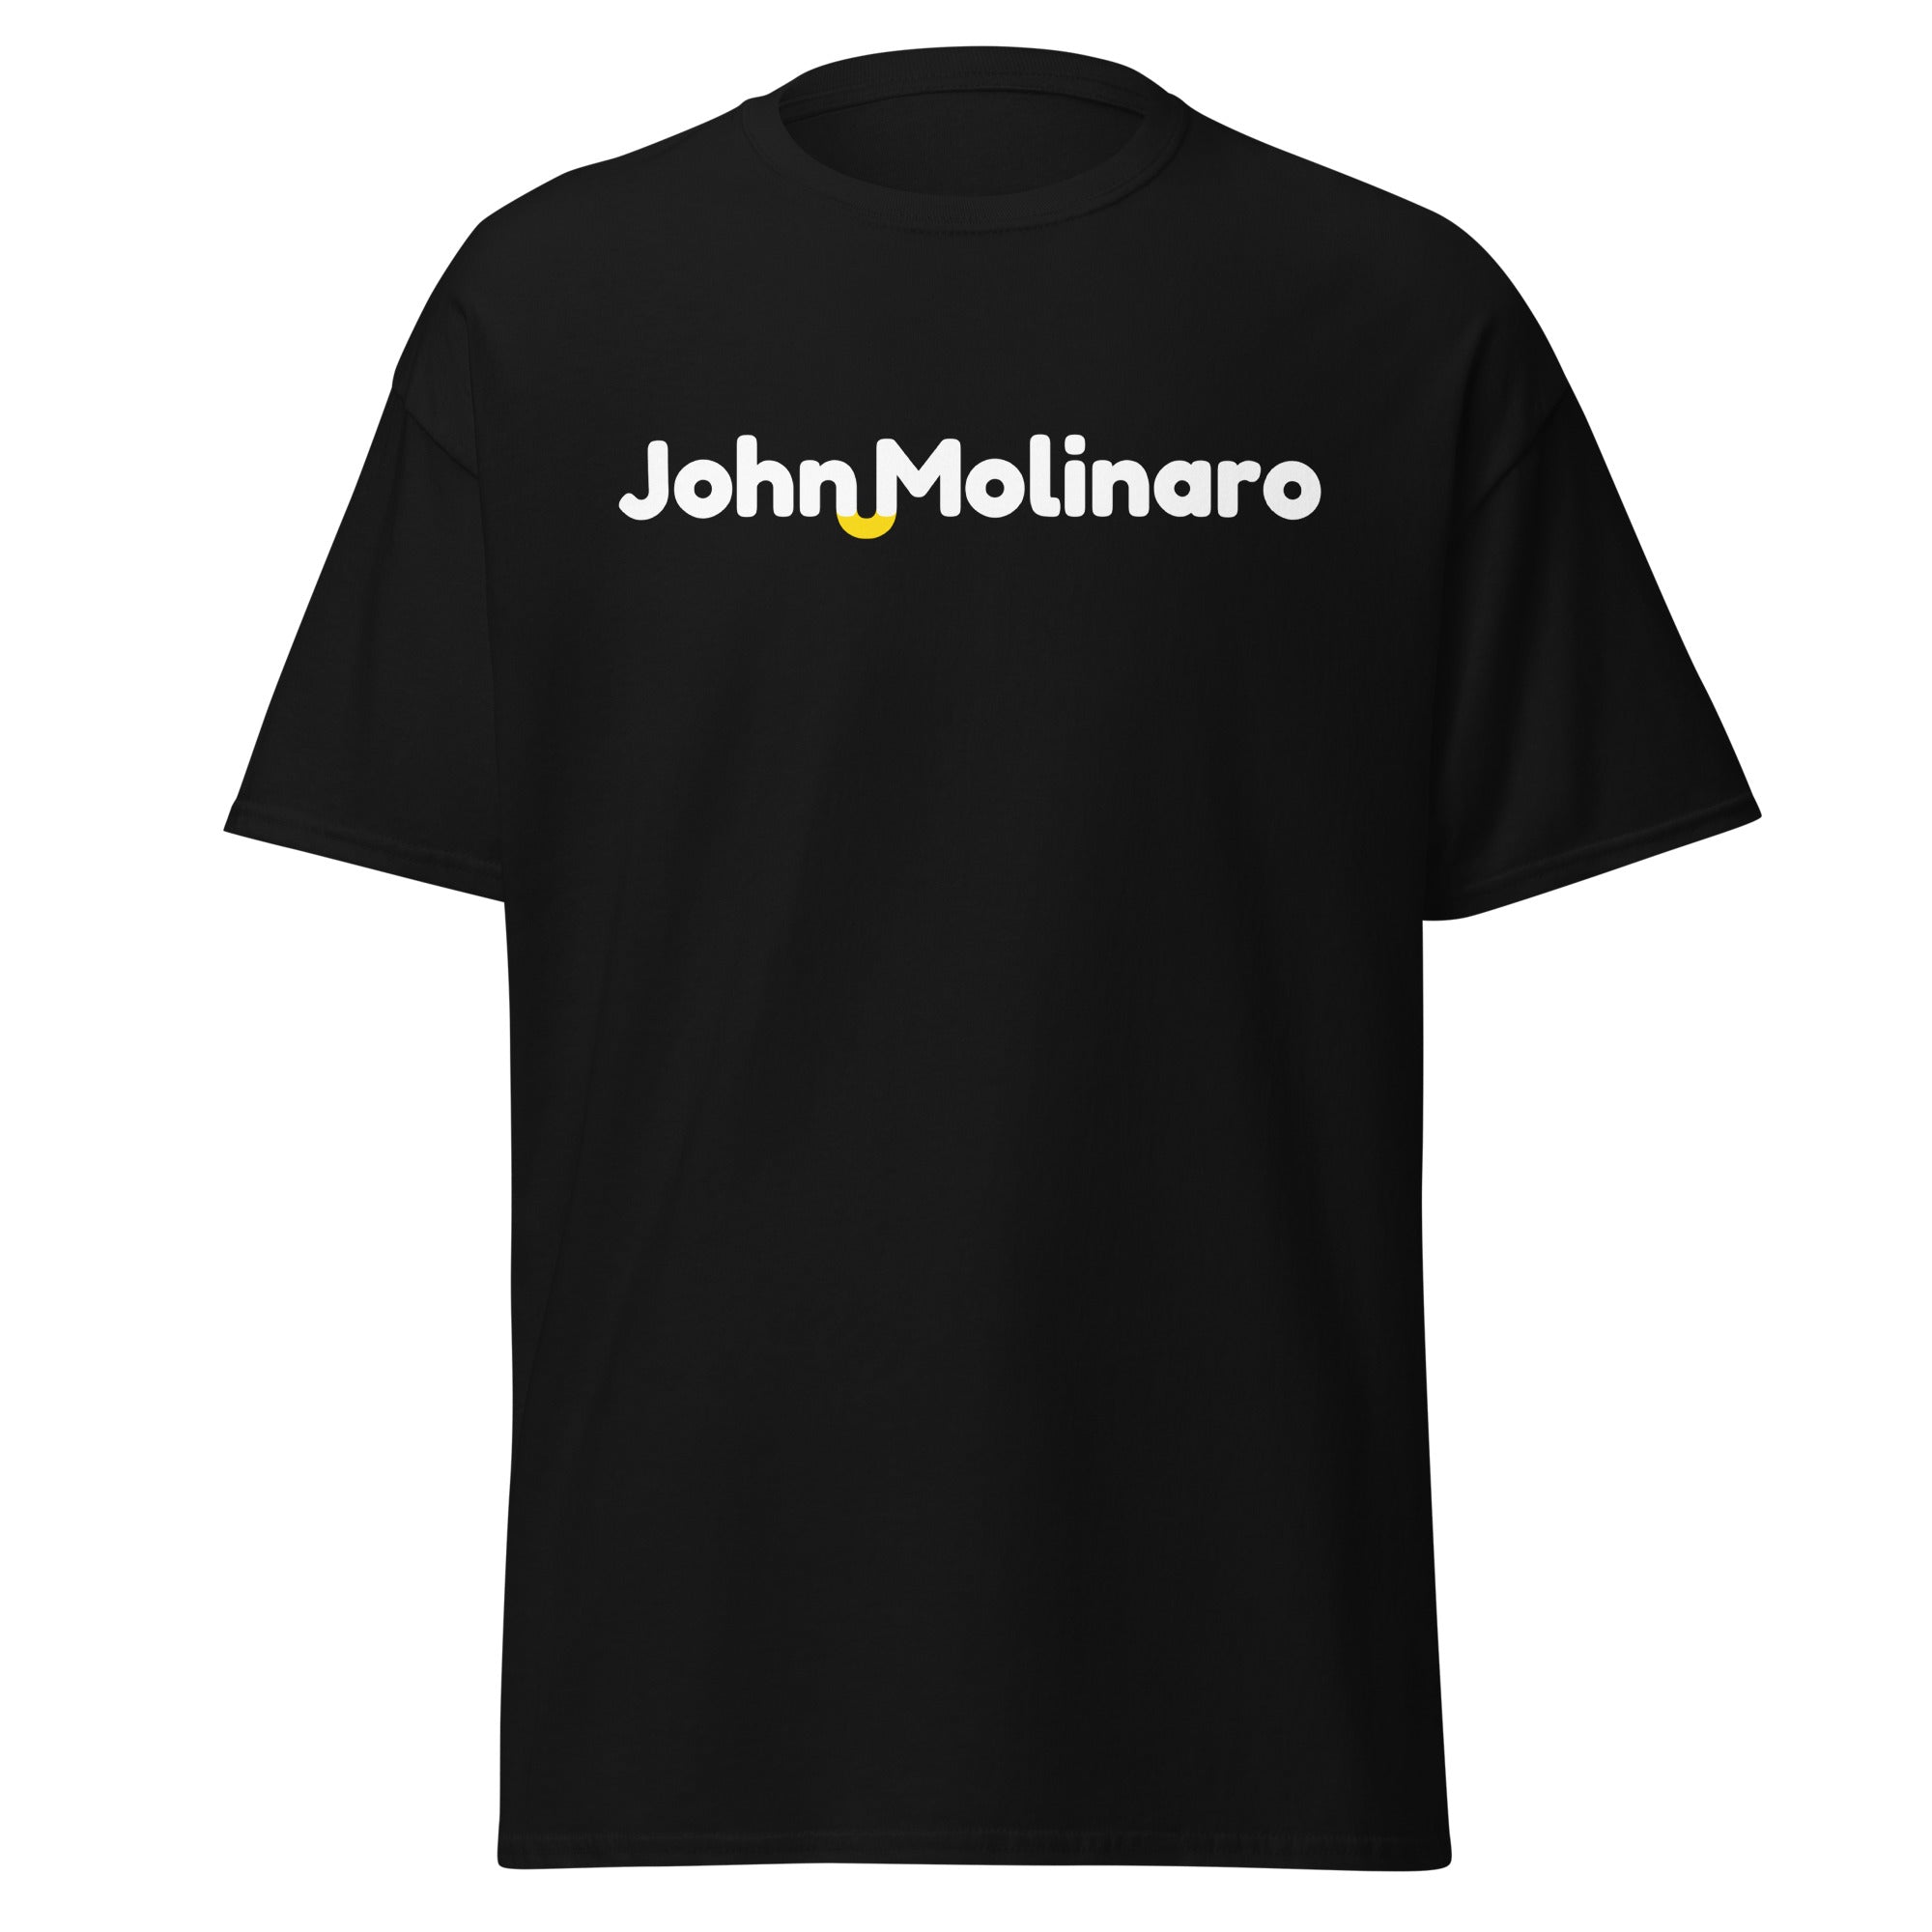 John Molinaro - classic tee